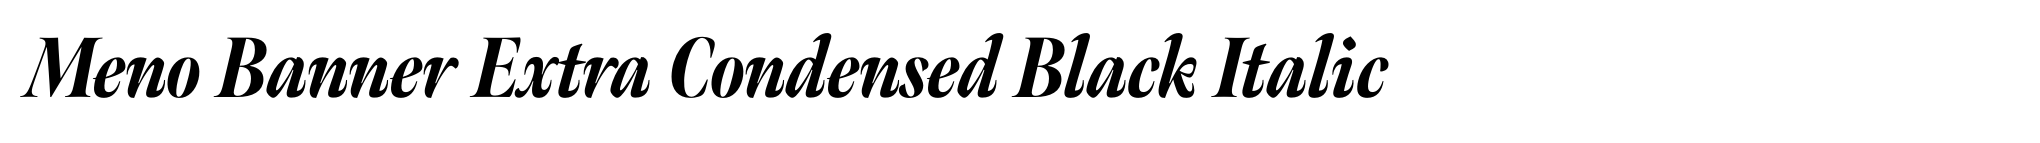 Meno Banner Extra Condensed Black Italic image